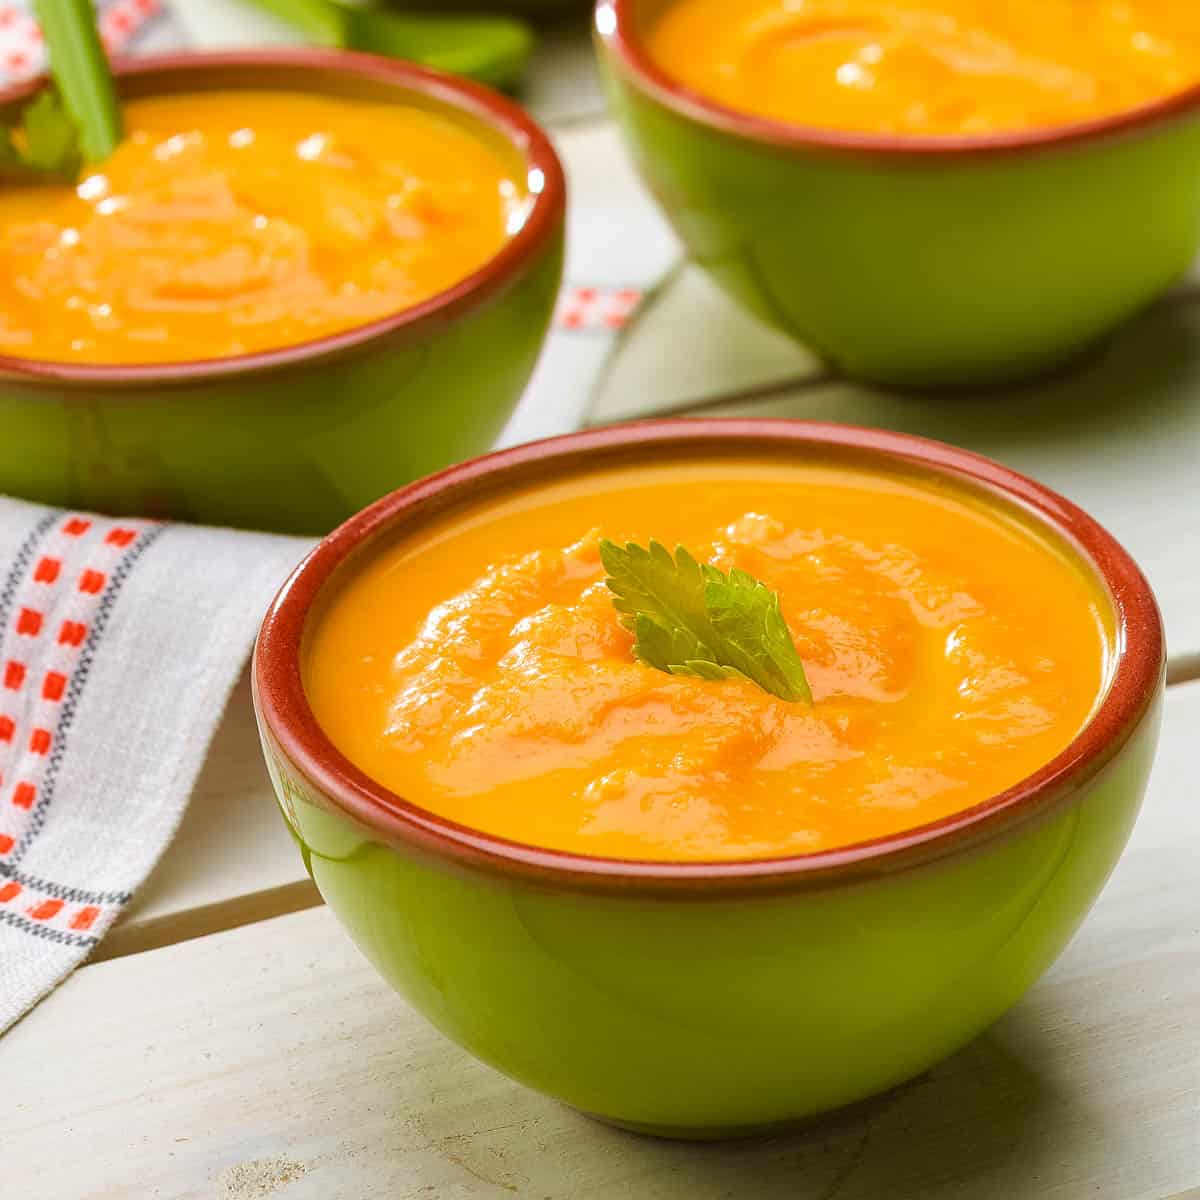 https://www.seasonedkitchen.com/wp-content/uploads/carrot-ginger-soup-recipe.jpg